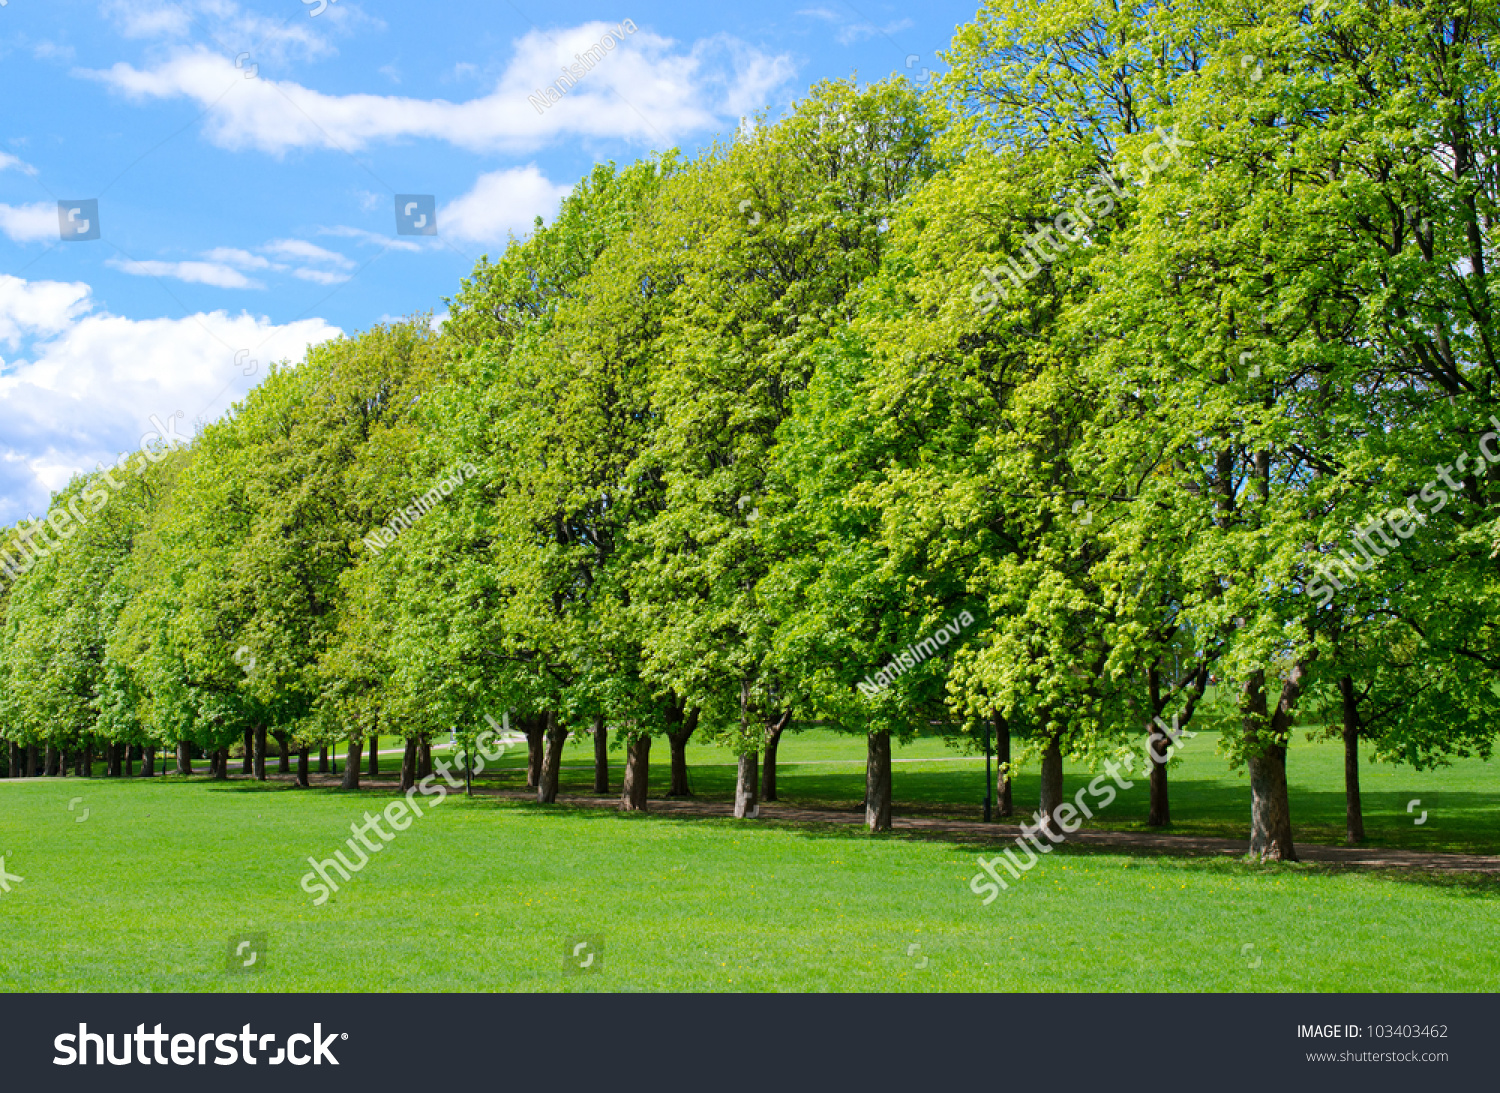 Tree line in the popular Vigeland park in Oslo, Norway #103403462